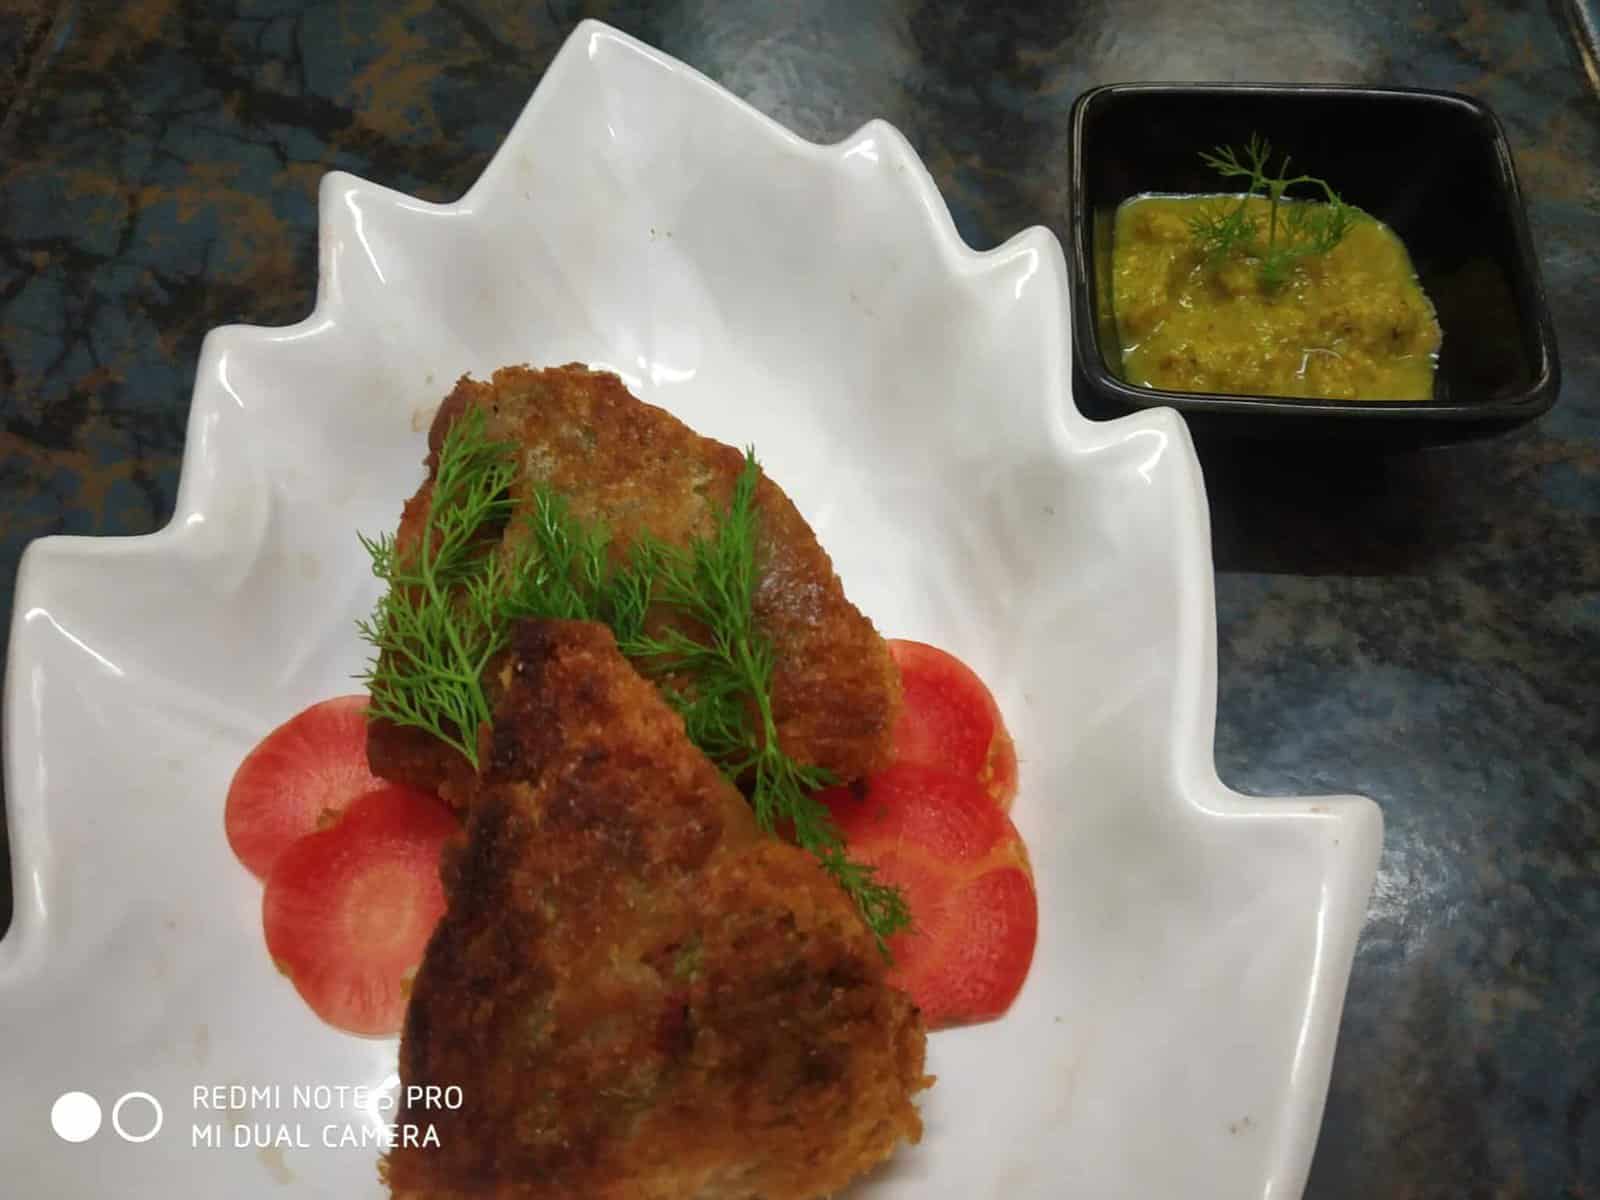 Bread samosa - Plattershare - Recipes, food stories and food lovers